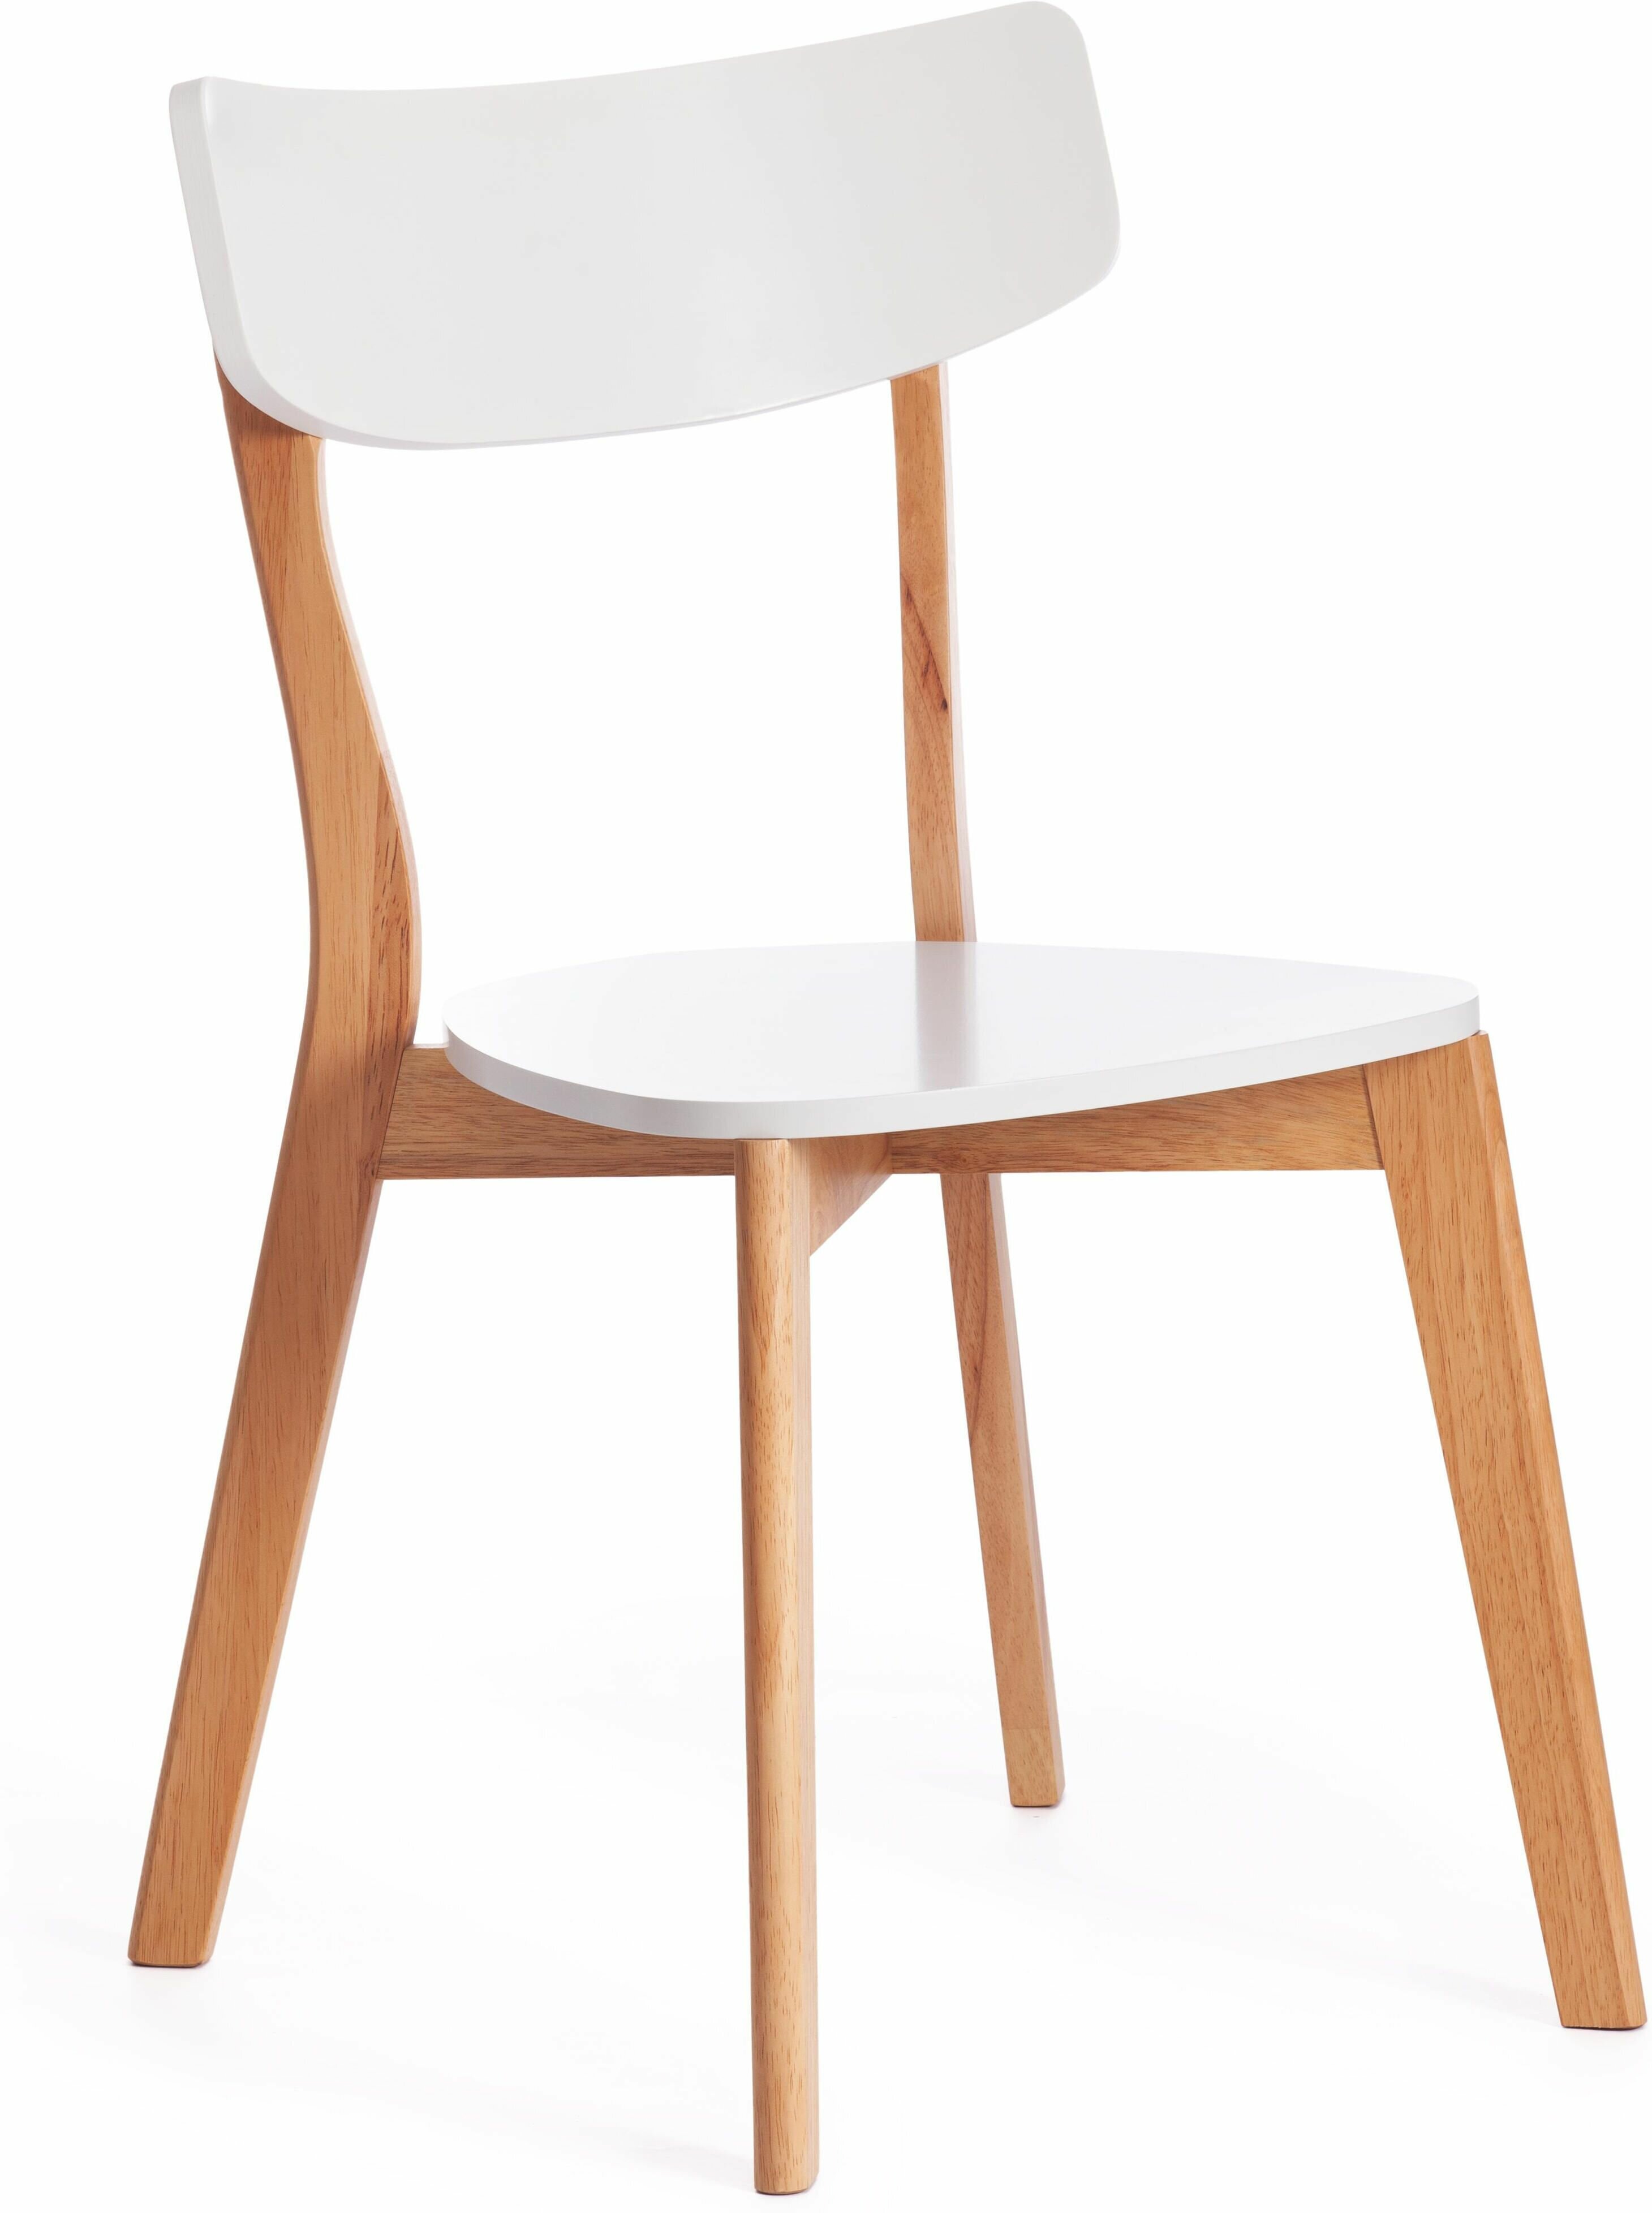 Деревянный стул Woodville Claire белый / натуральный